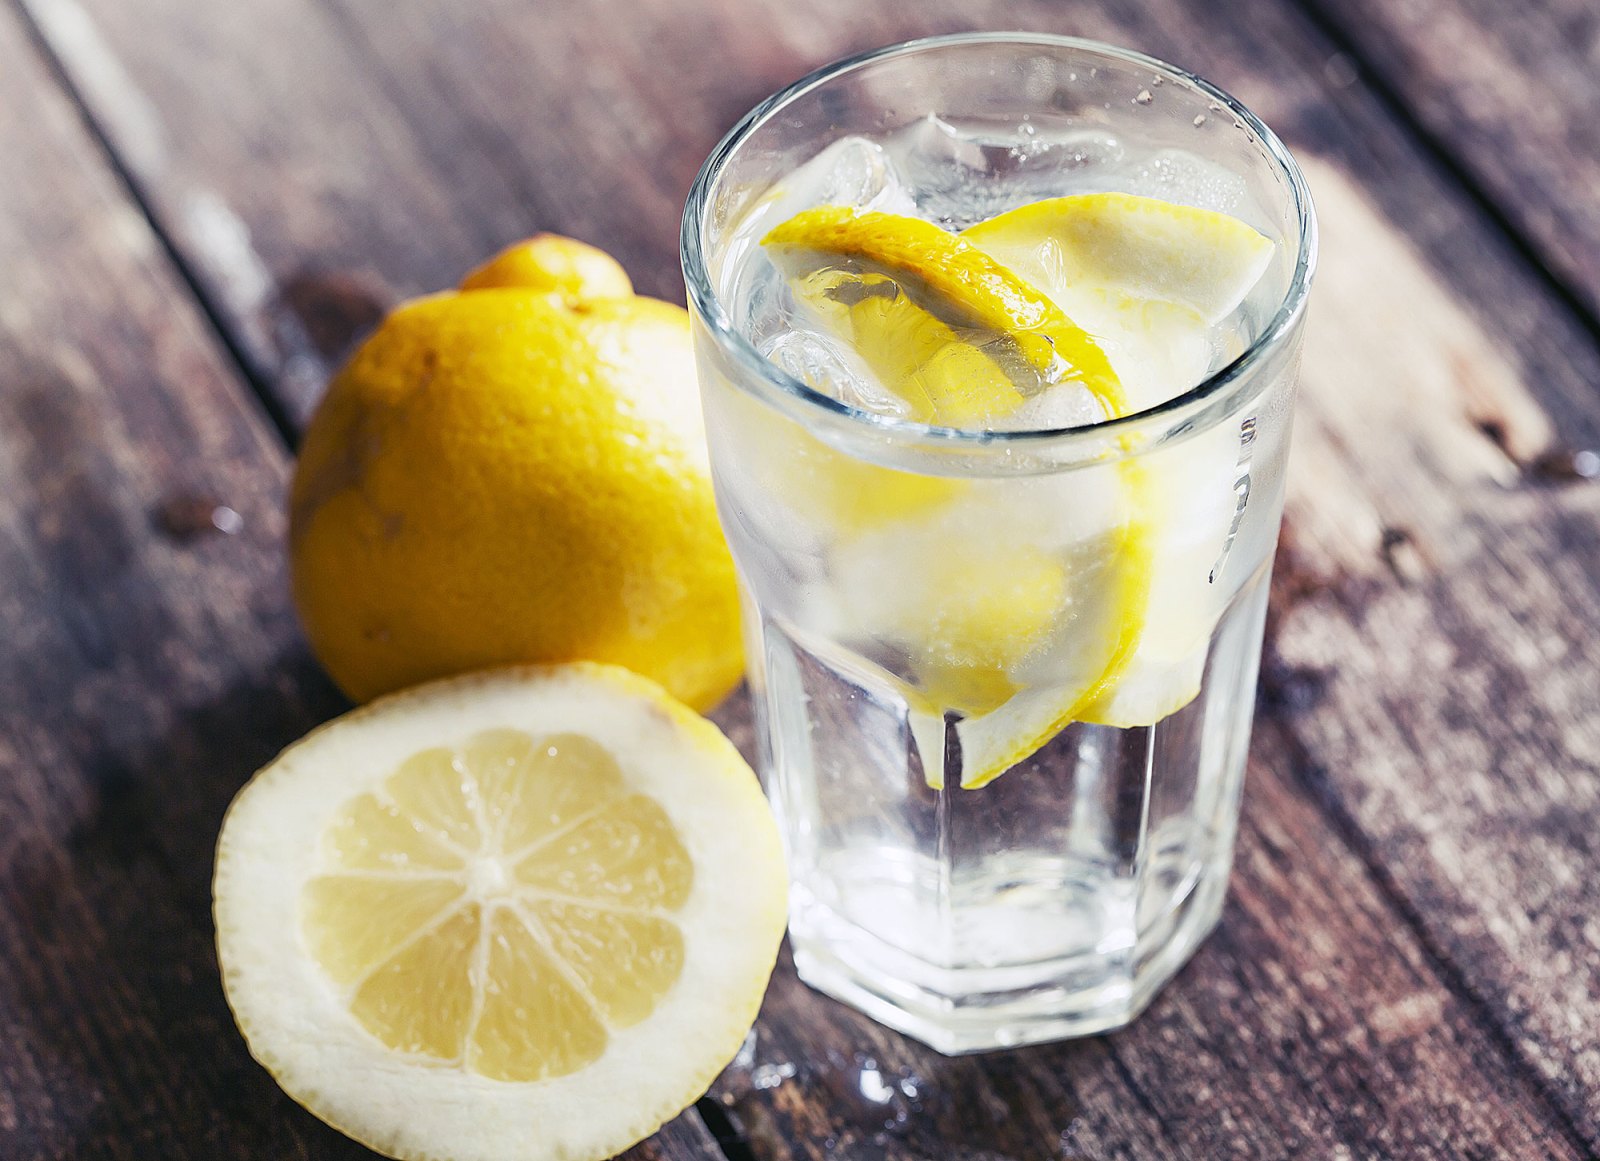 Gisele Bundchens Secrets to Staying in Shape Drinking Water with Lemon